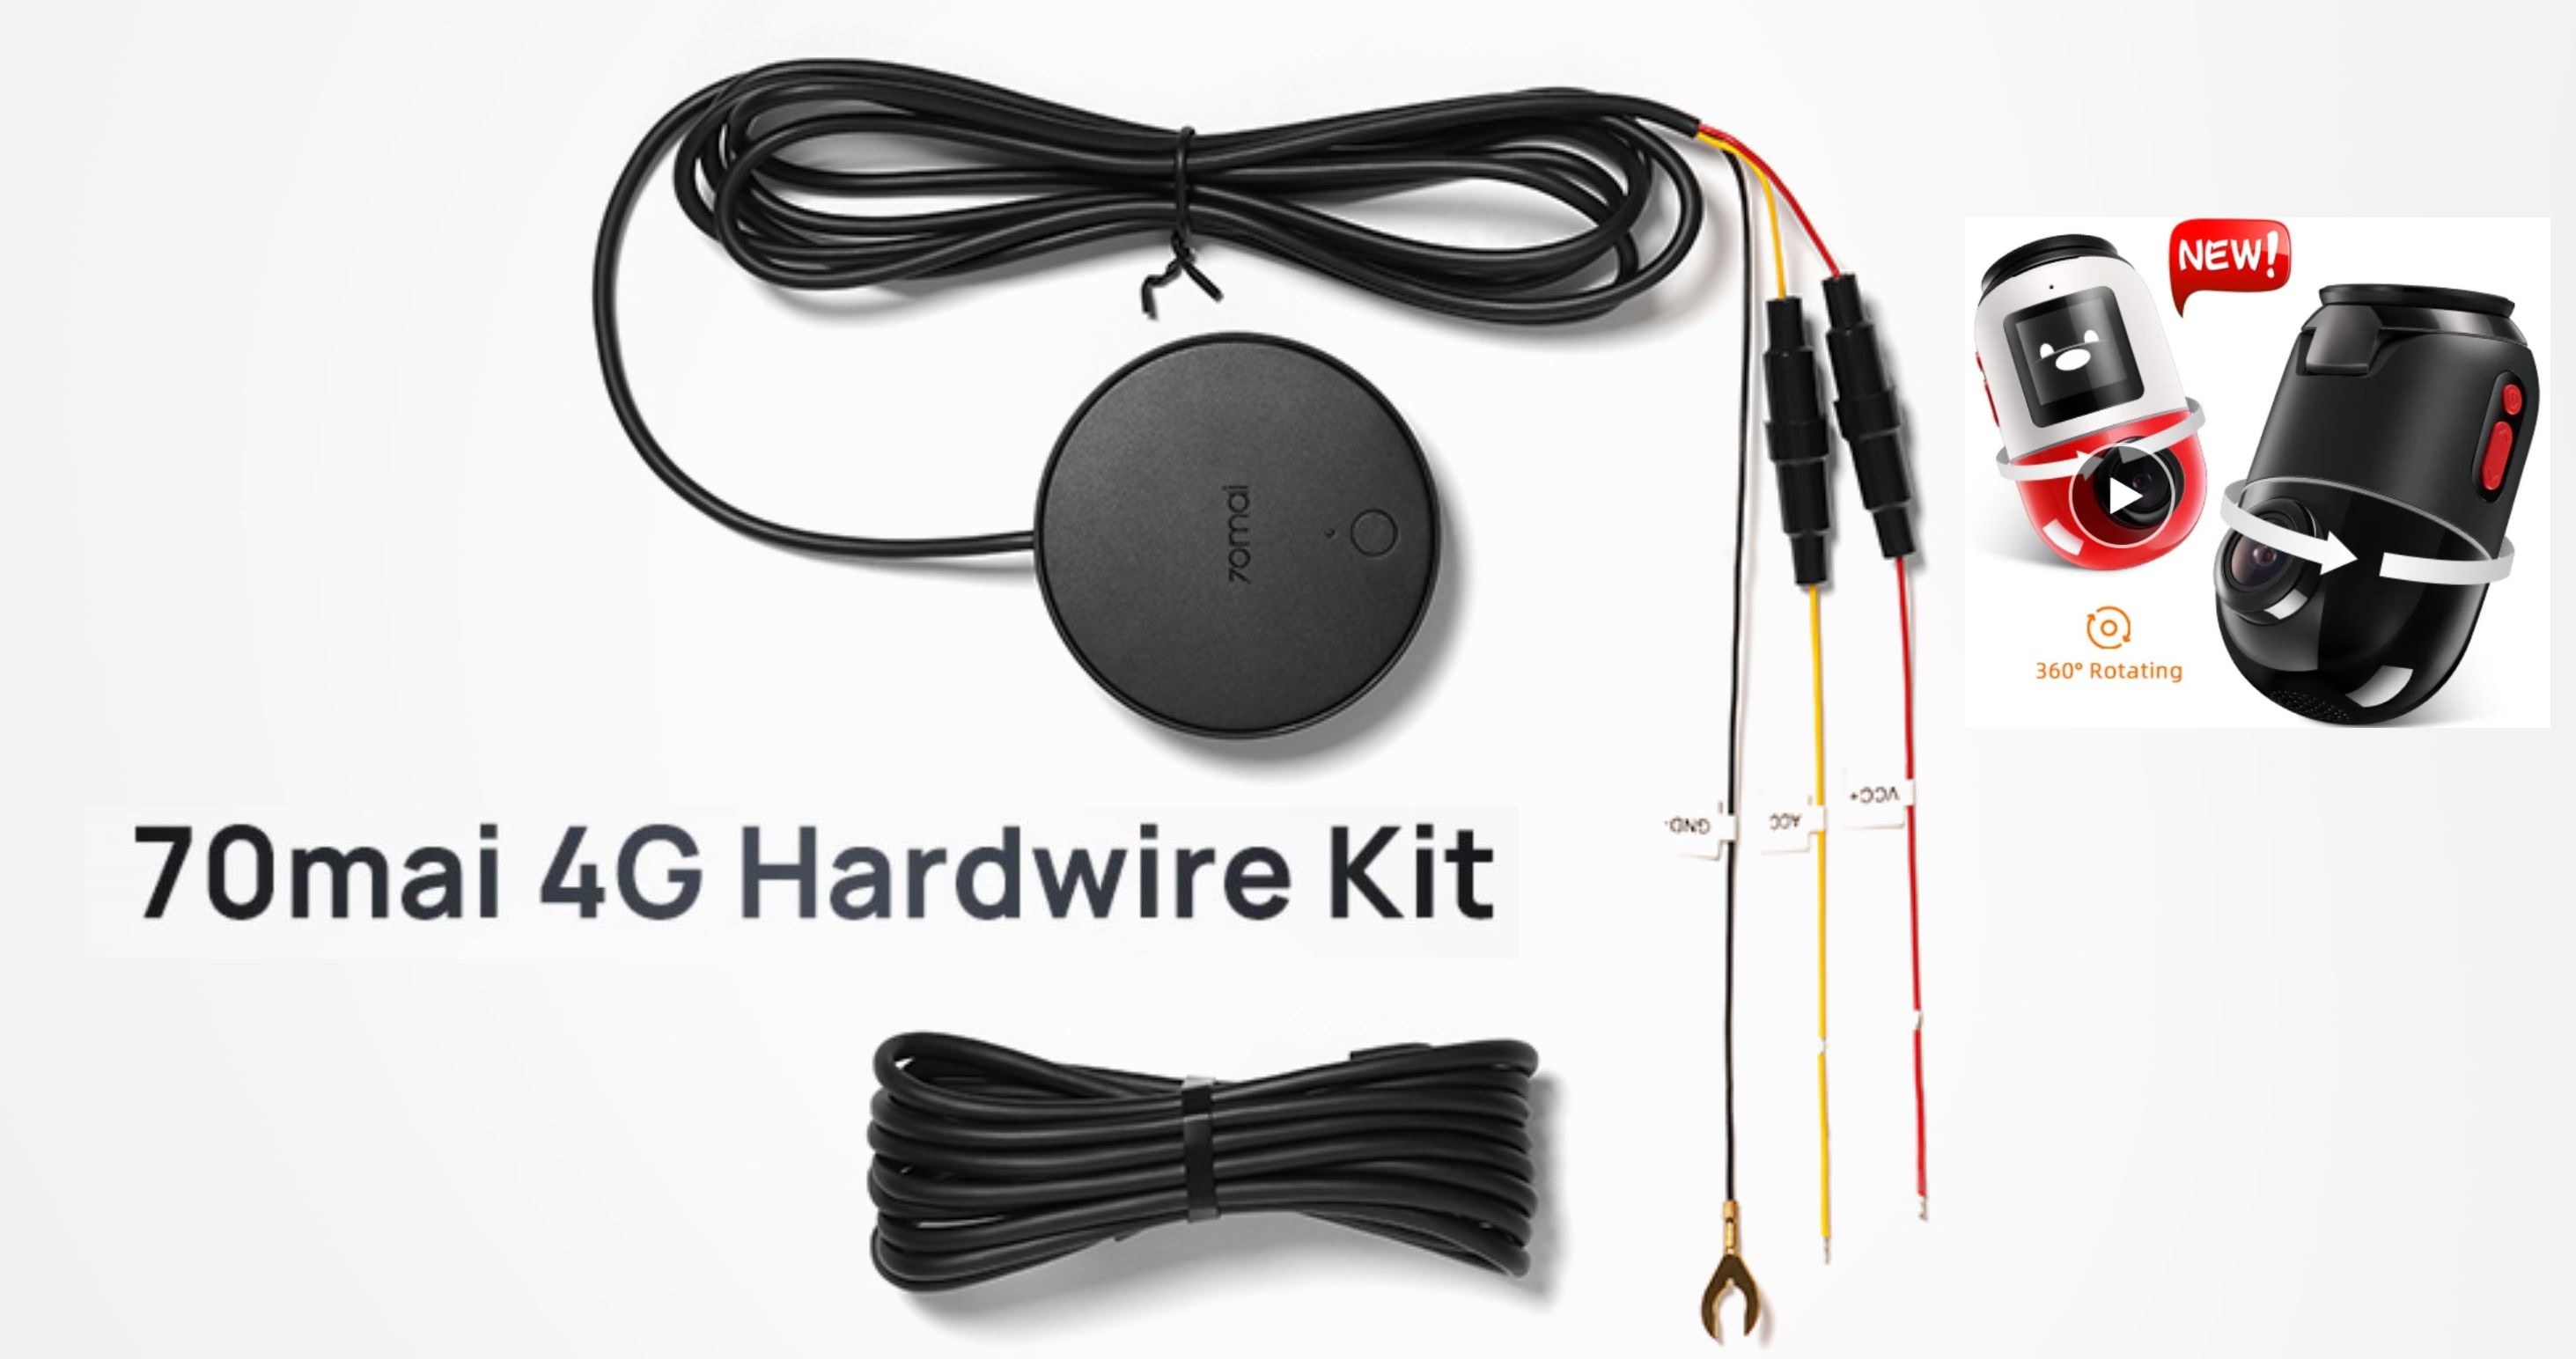 70mai 4G Hardwire Kit Recensione